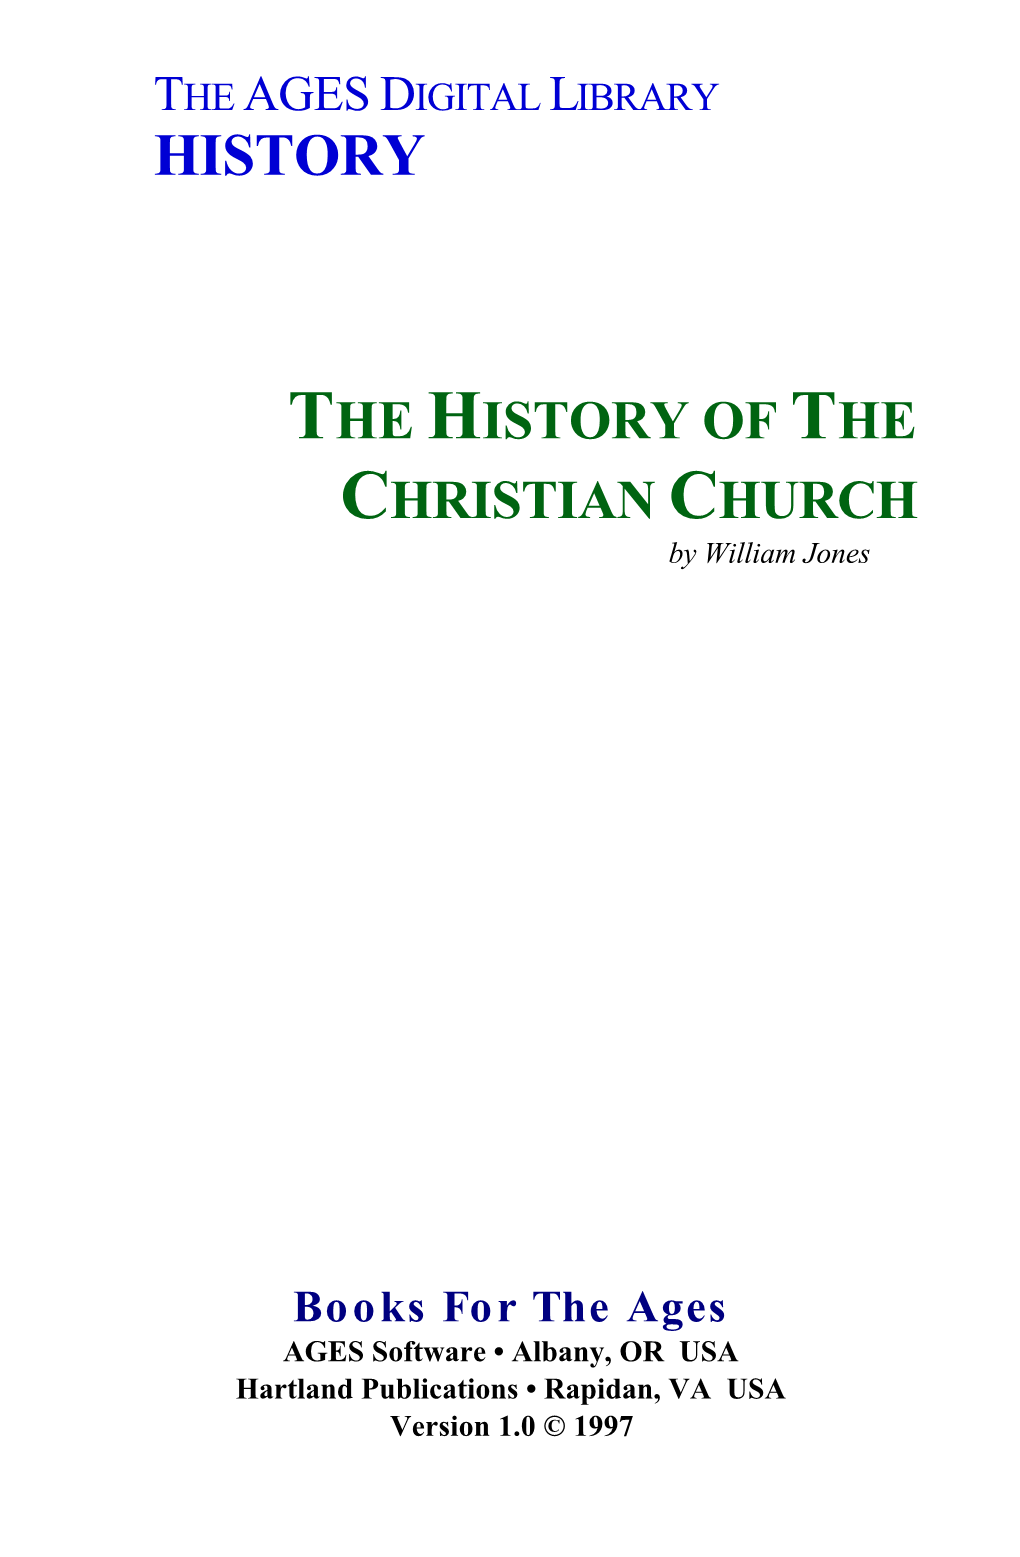 History of the Christian Church Vol. 2